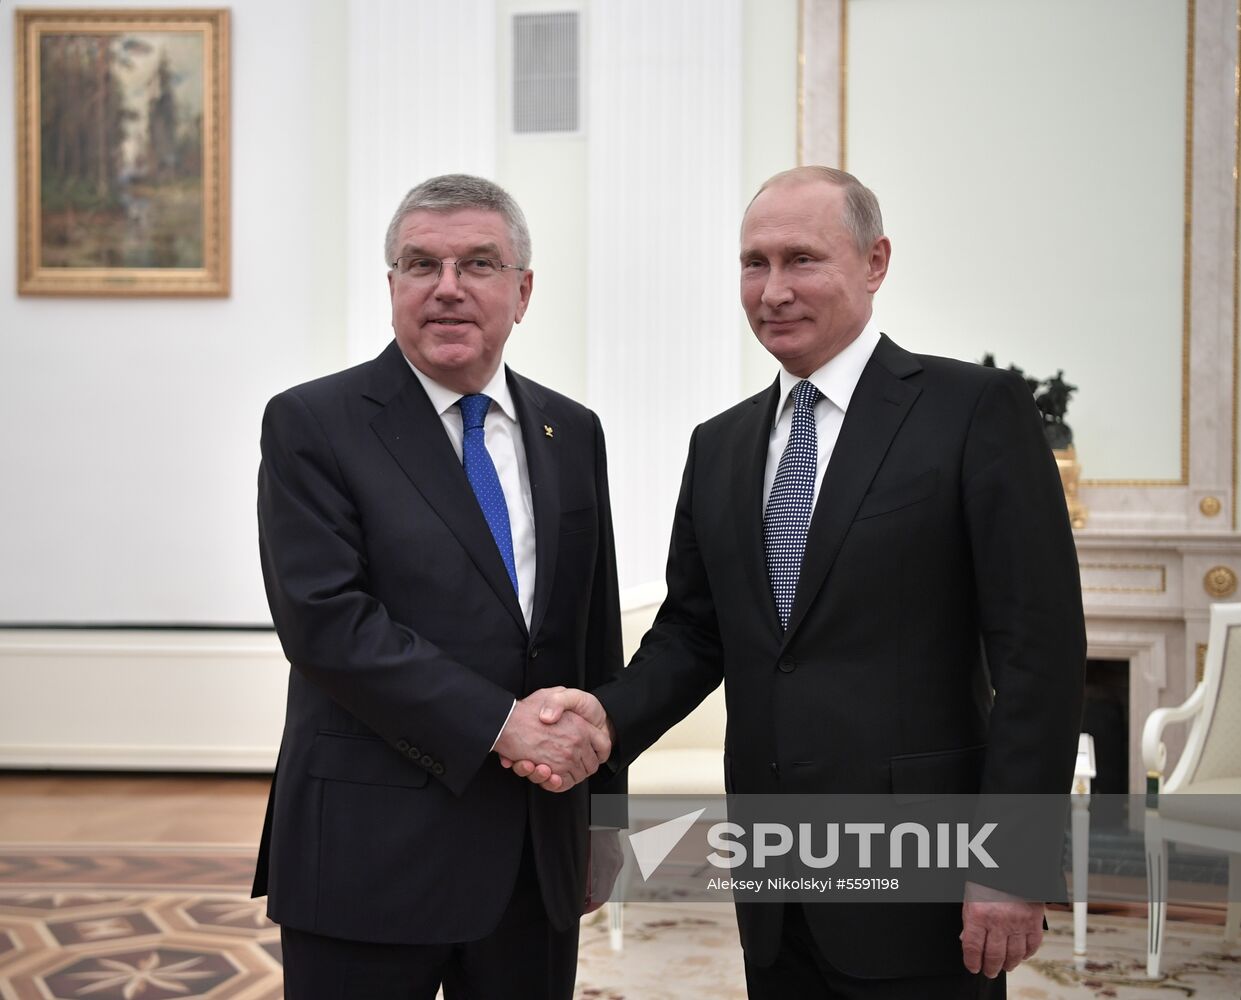 President Putin meets with IOC President Thomas Bach